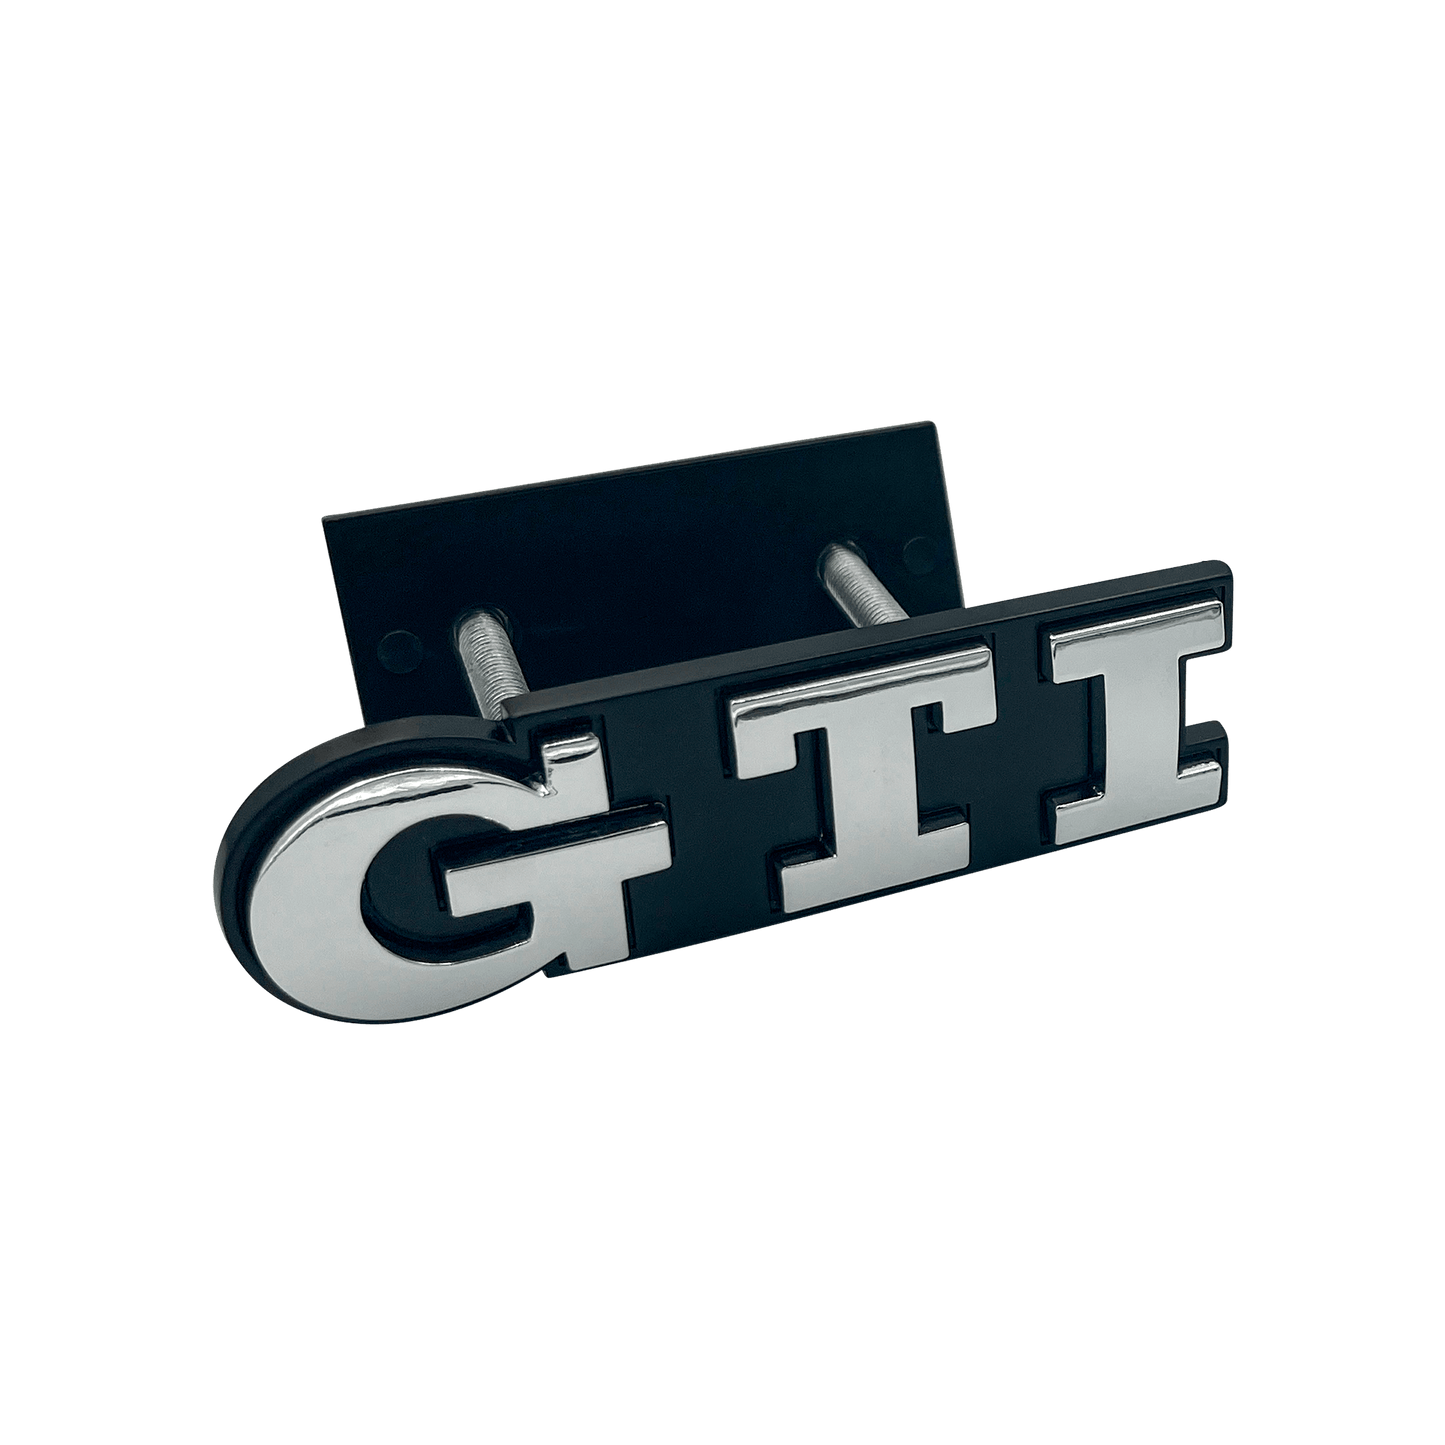 Chrome VW GTI Front Emblem Badge 